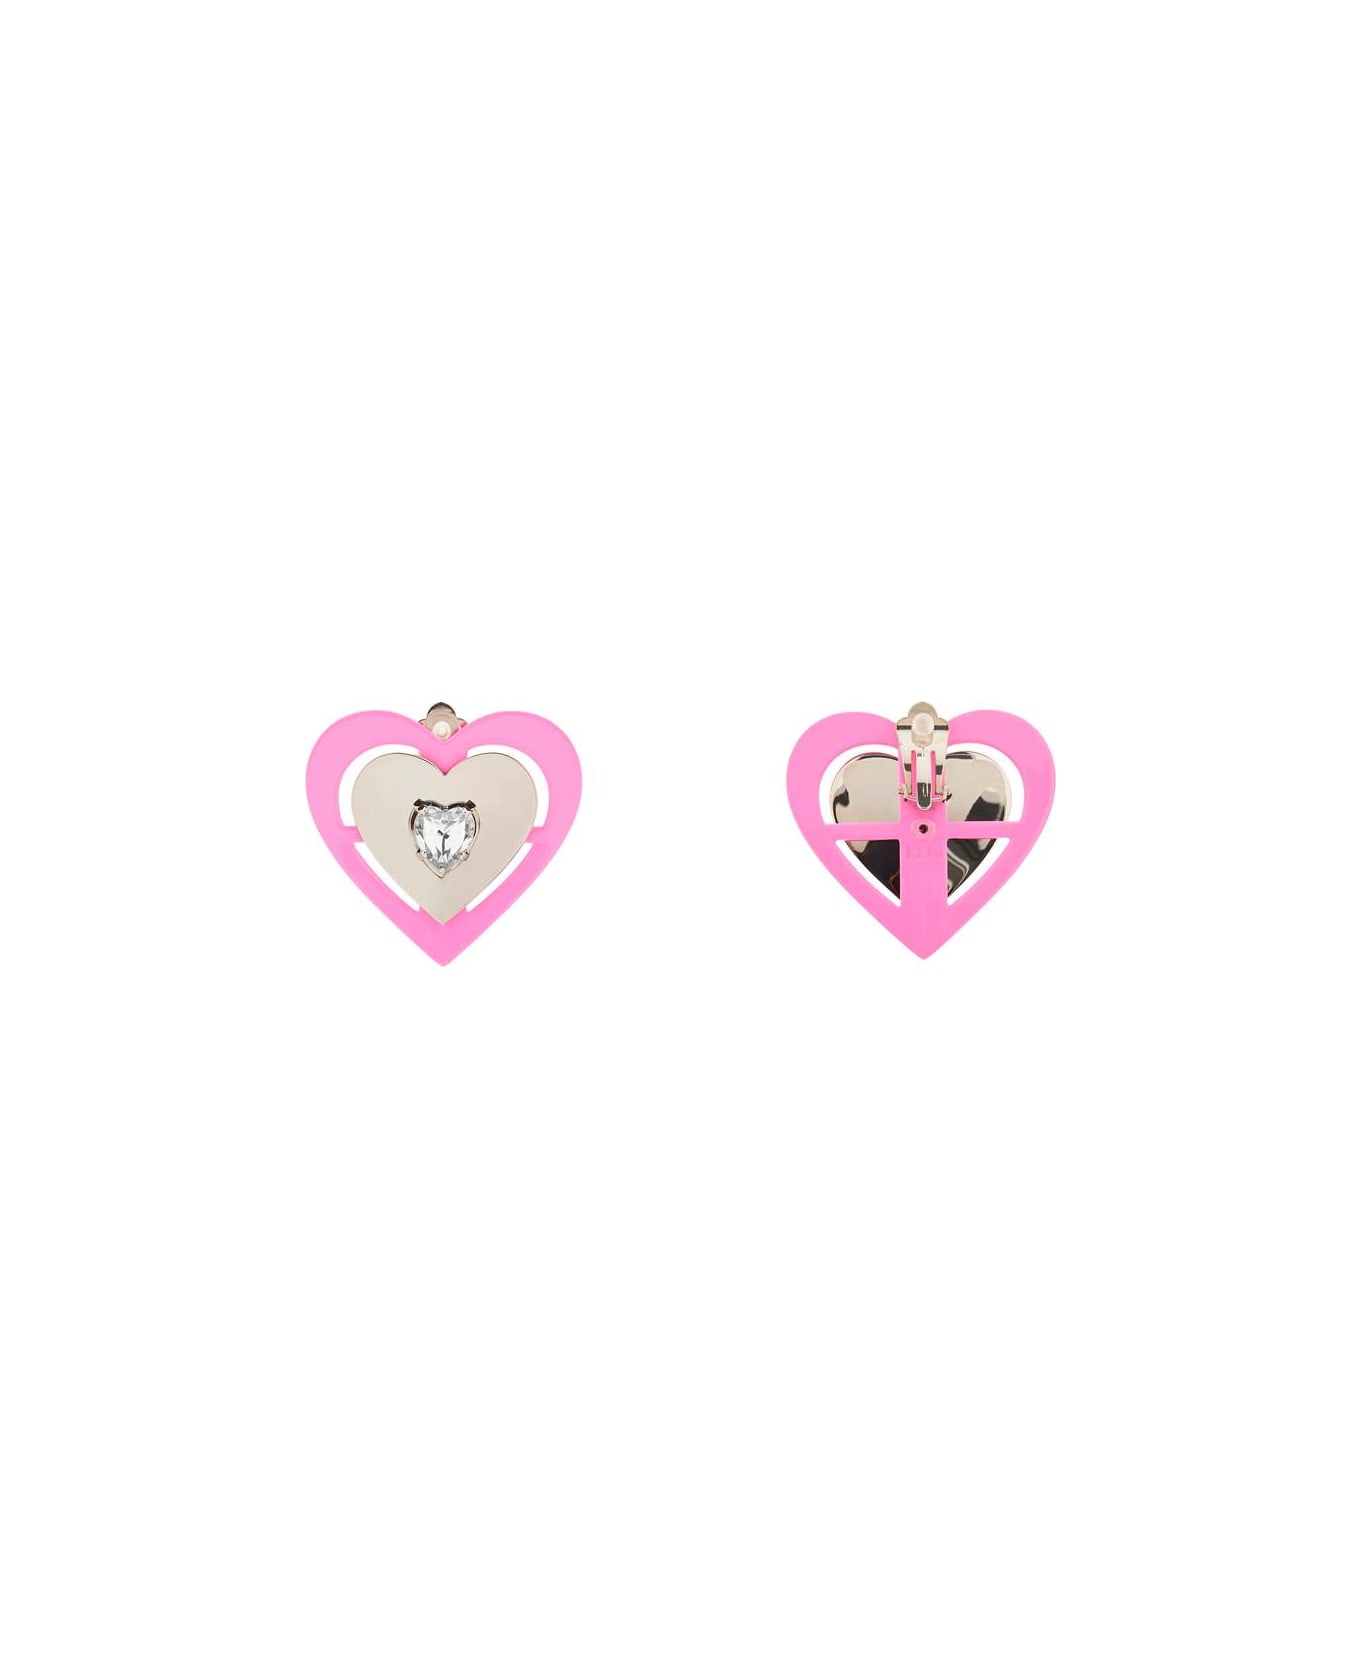 SafSafu 'pink Neon Heart' Clip-on Earrings - SILVER/PINK